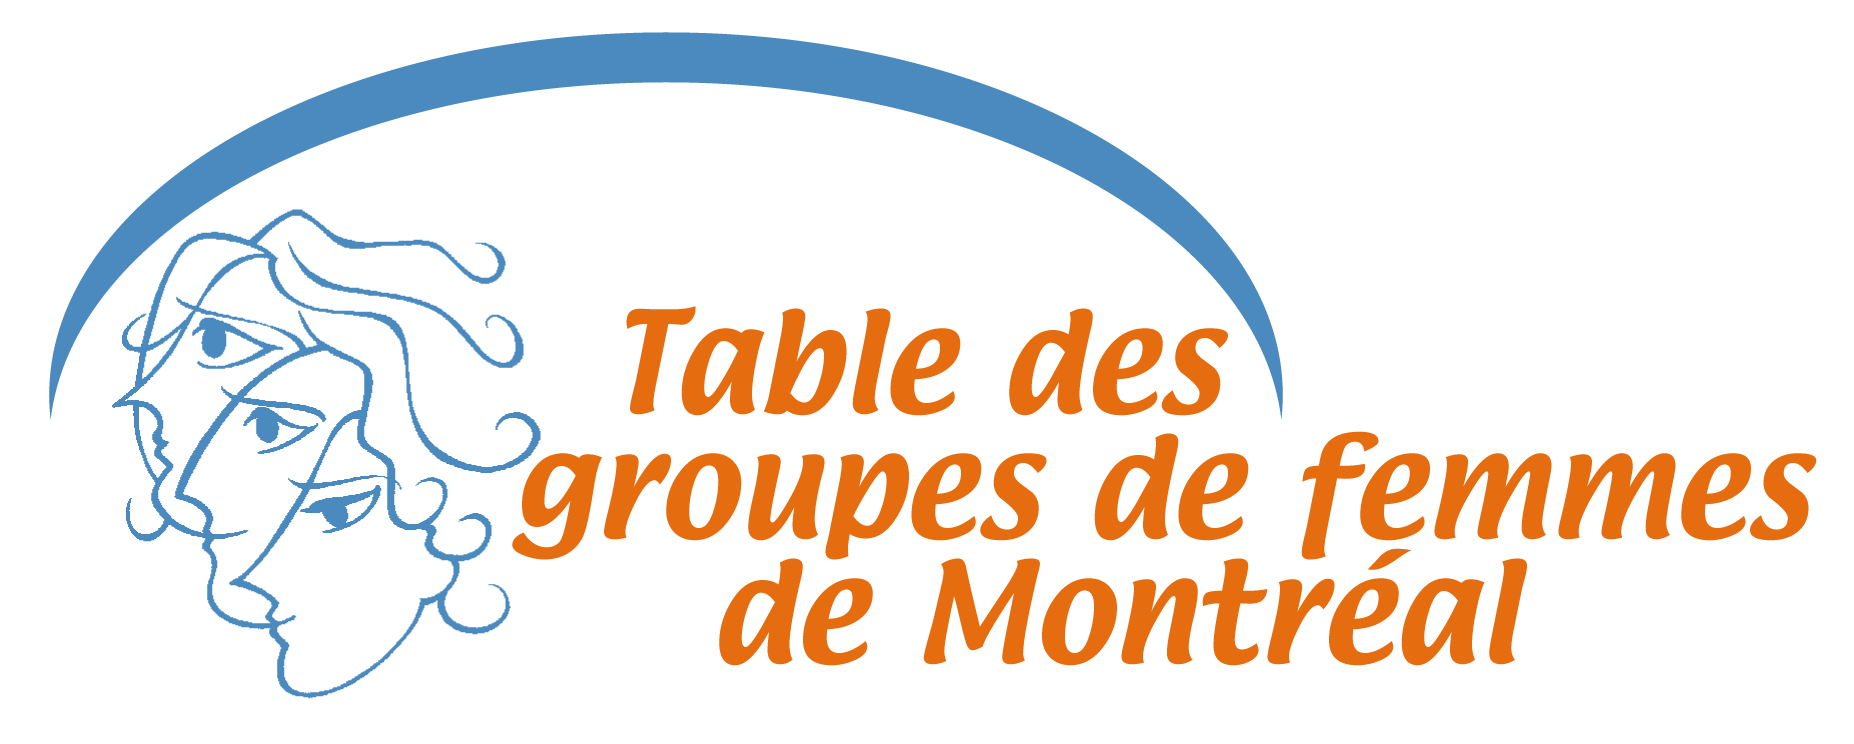 logo_table_groupe_femmes.bmp